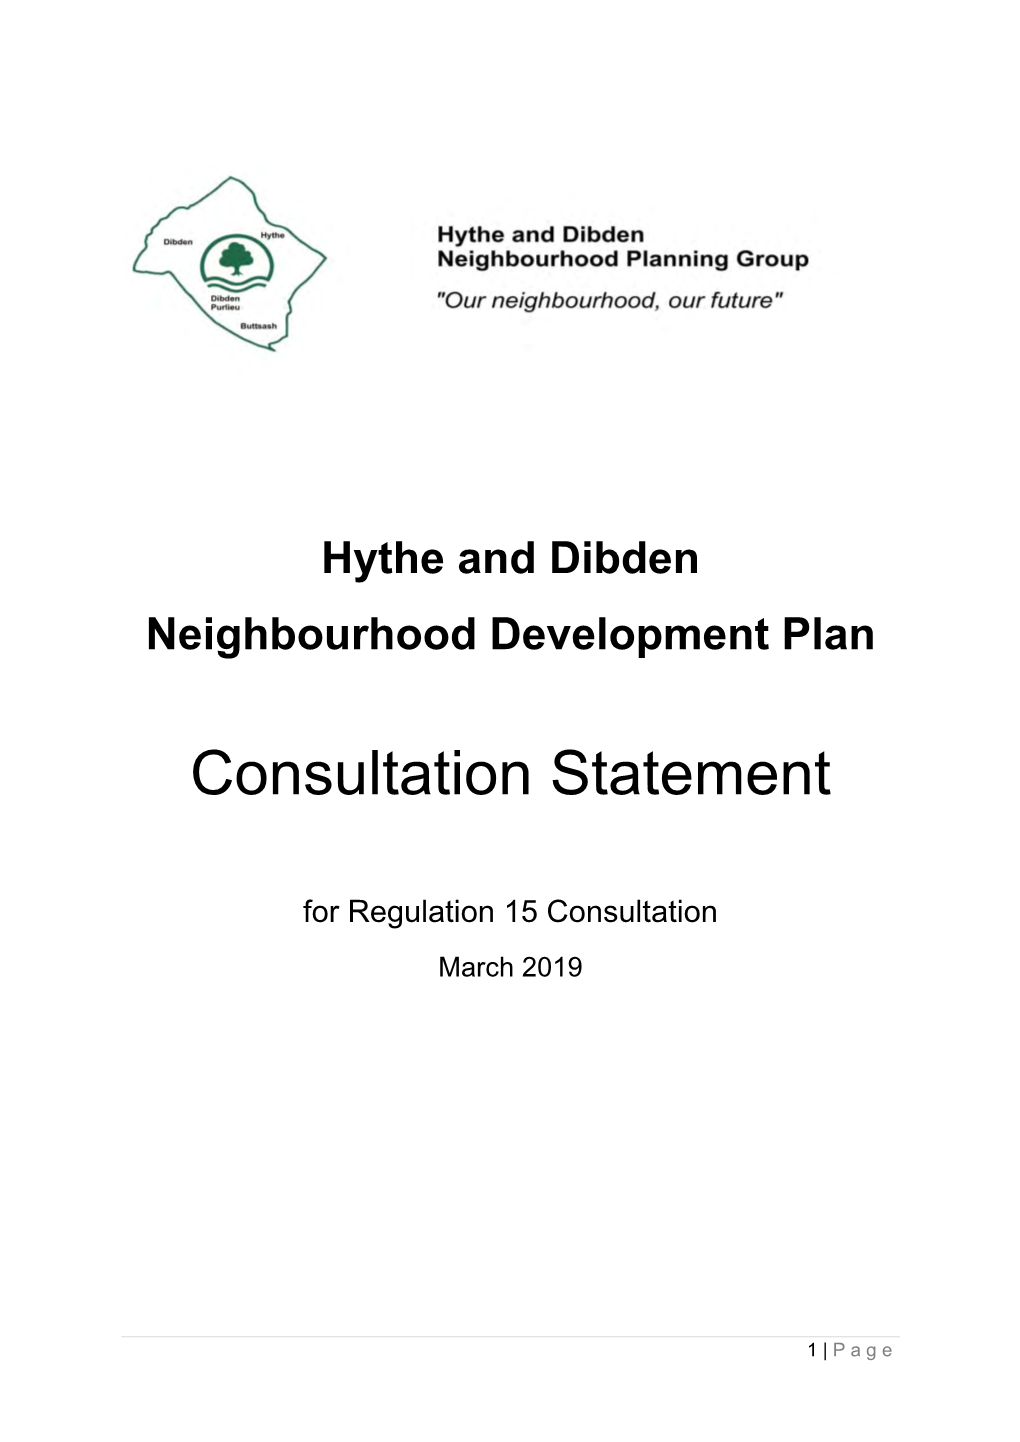 Hythe and Dibden Consultation Statement